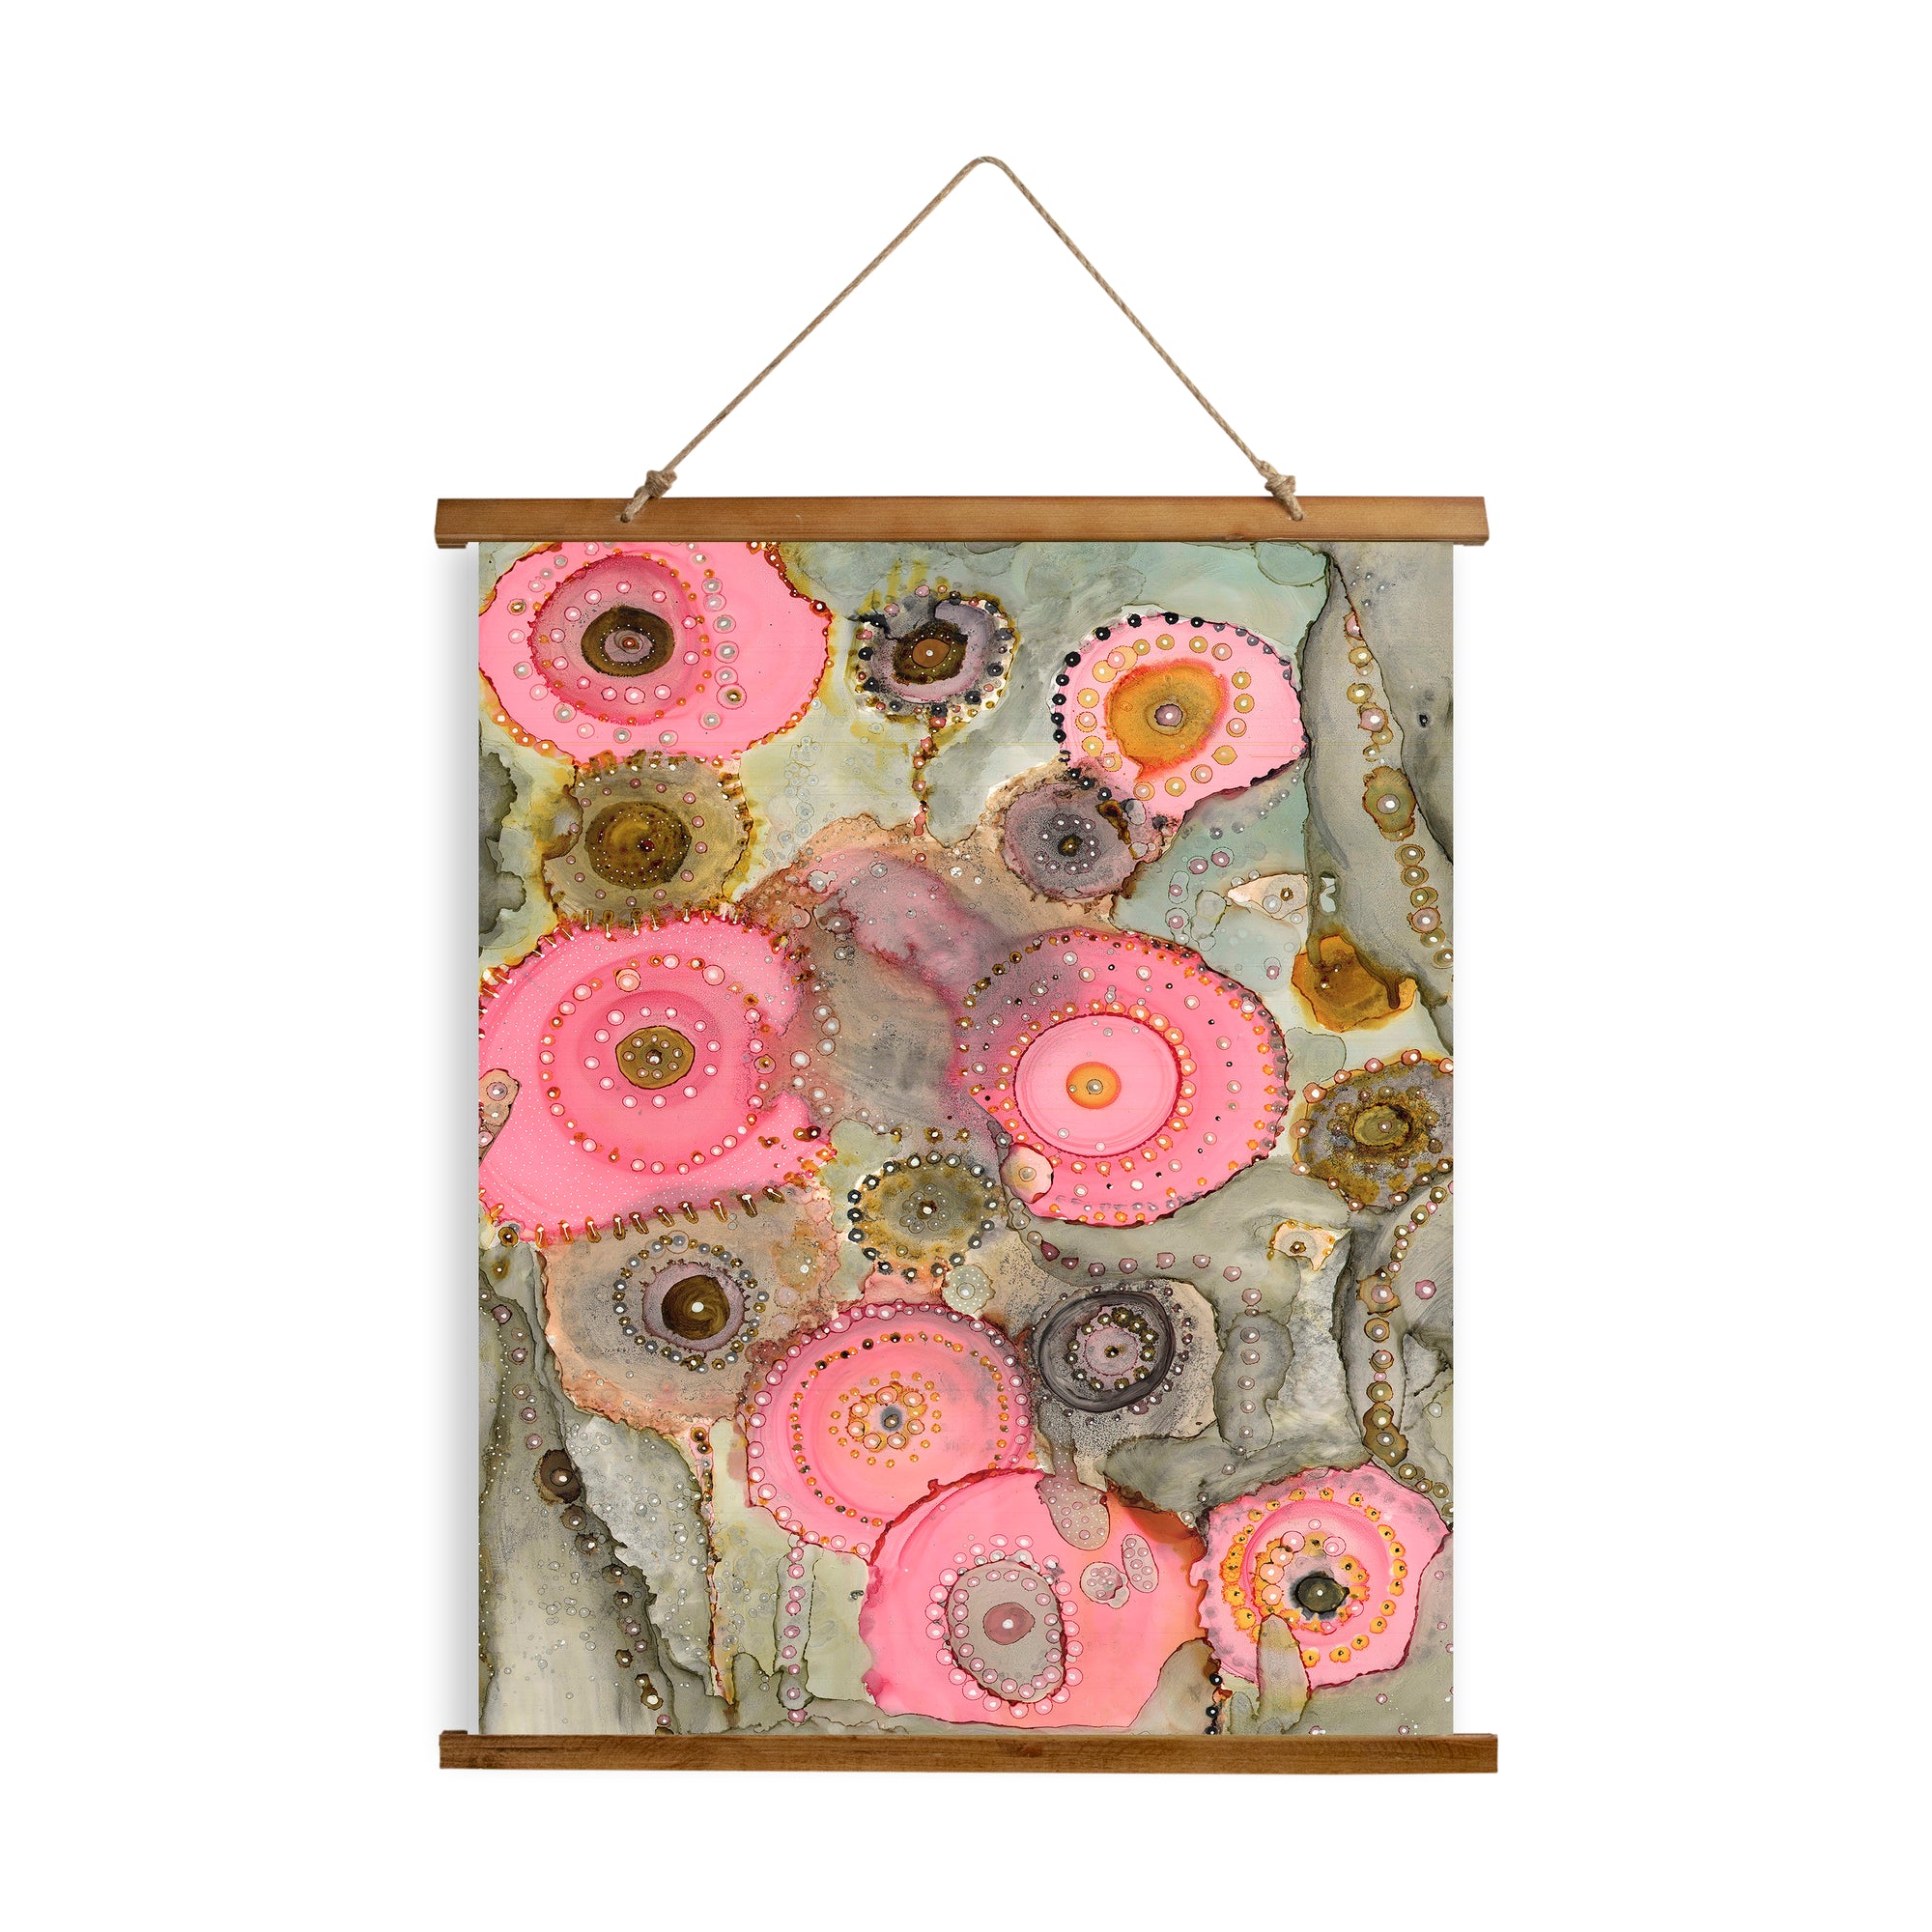 Whimsical Wood Slat Tapestry "Pink Matter"